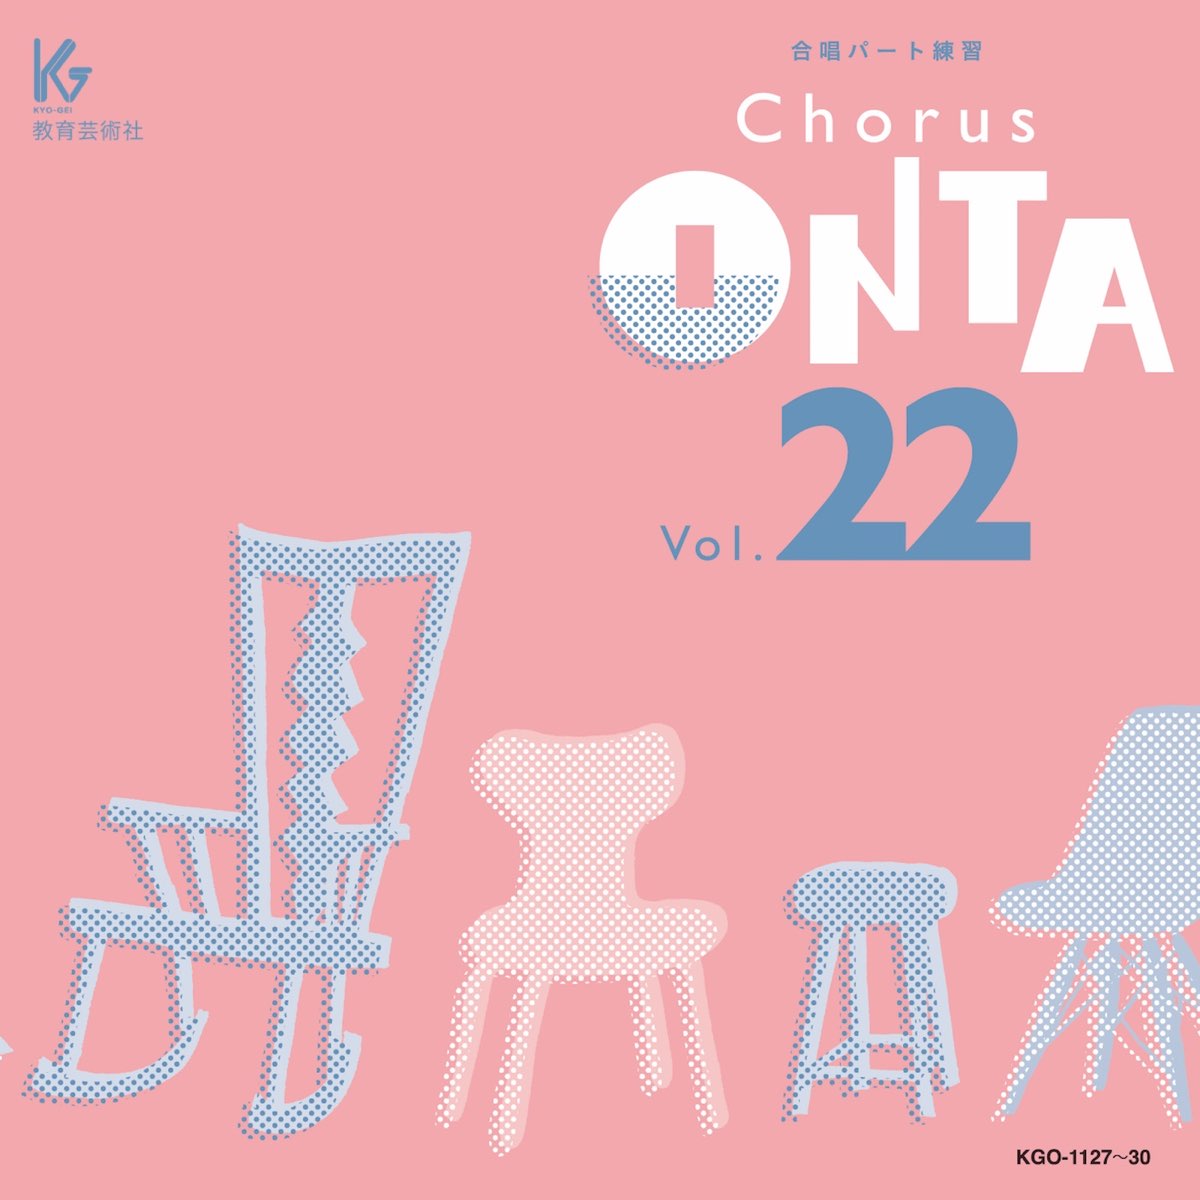 Chorus ONTA VOL.9 合唱パート練習CD - クラシック